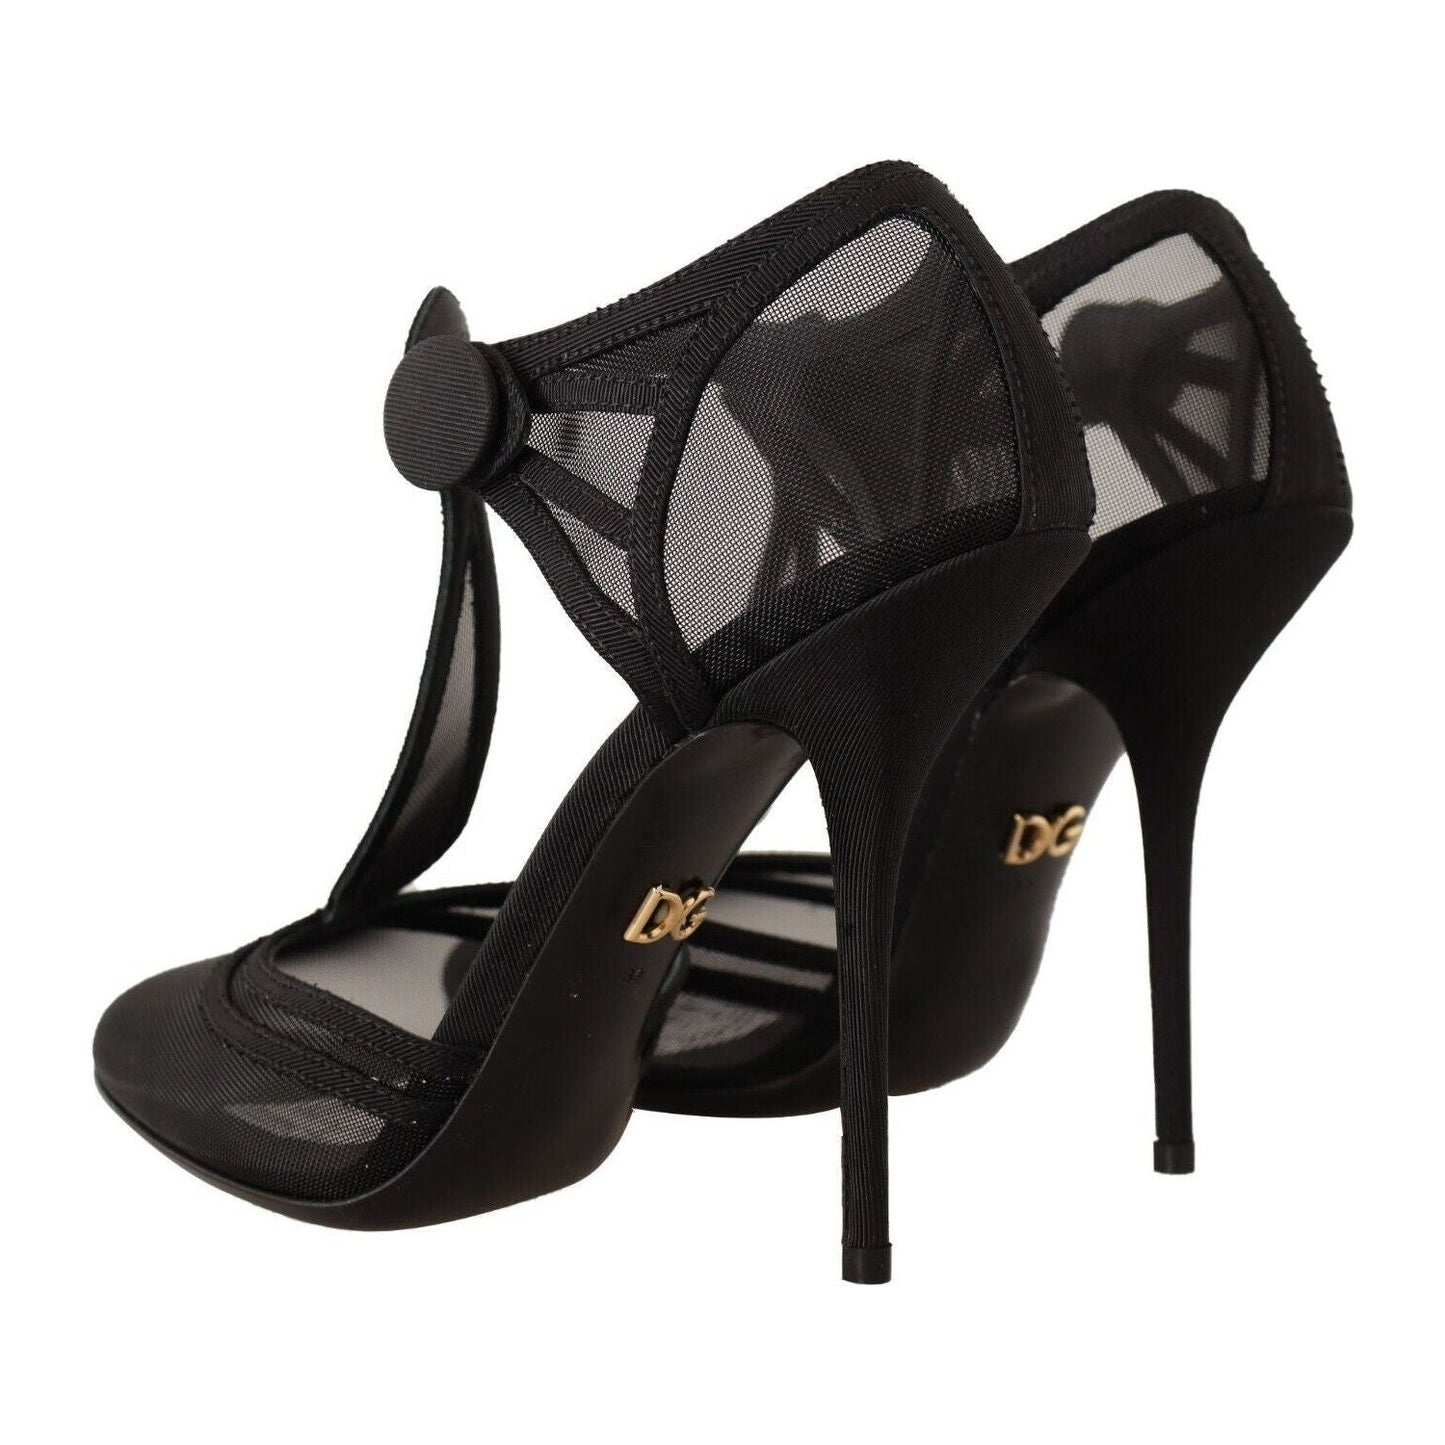 Dolce & Gabbana Elegant Mesh T-Strap Stiletto Pumps black-mesh-t-strap-stiletto-heels-pumps-shoes s-l1600-3-171-fd2c9a0f-c02.jpg